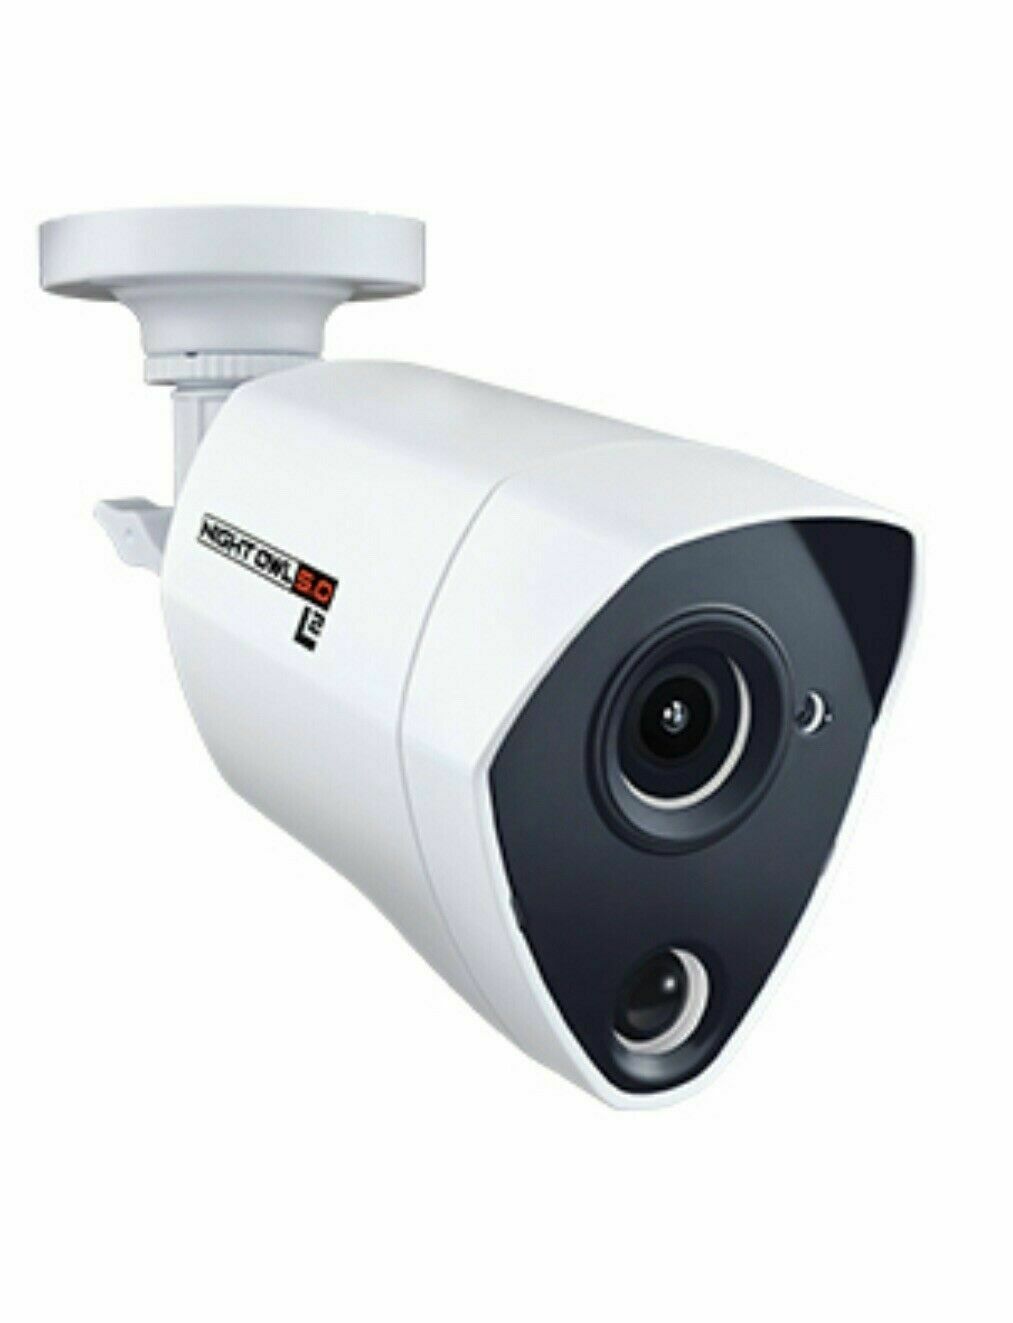 night owl 4k security camera